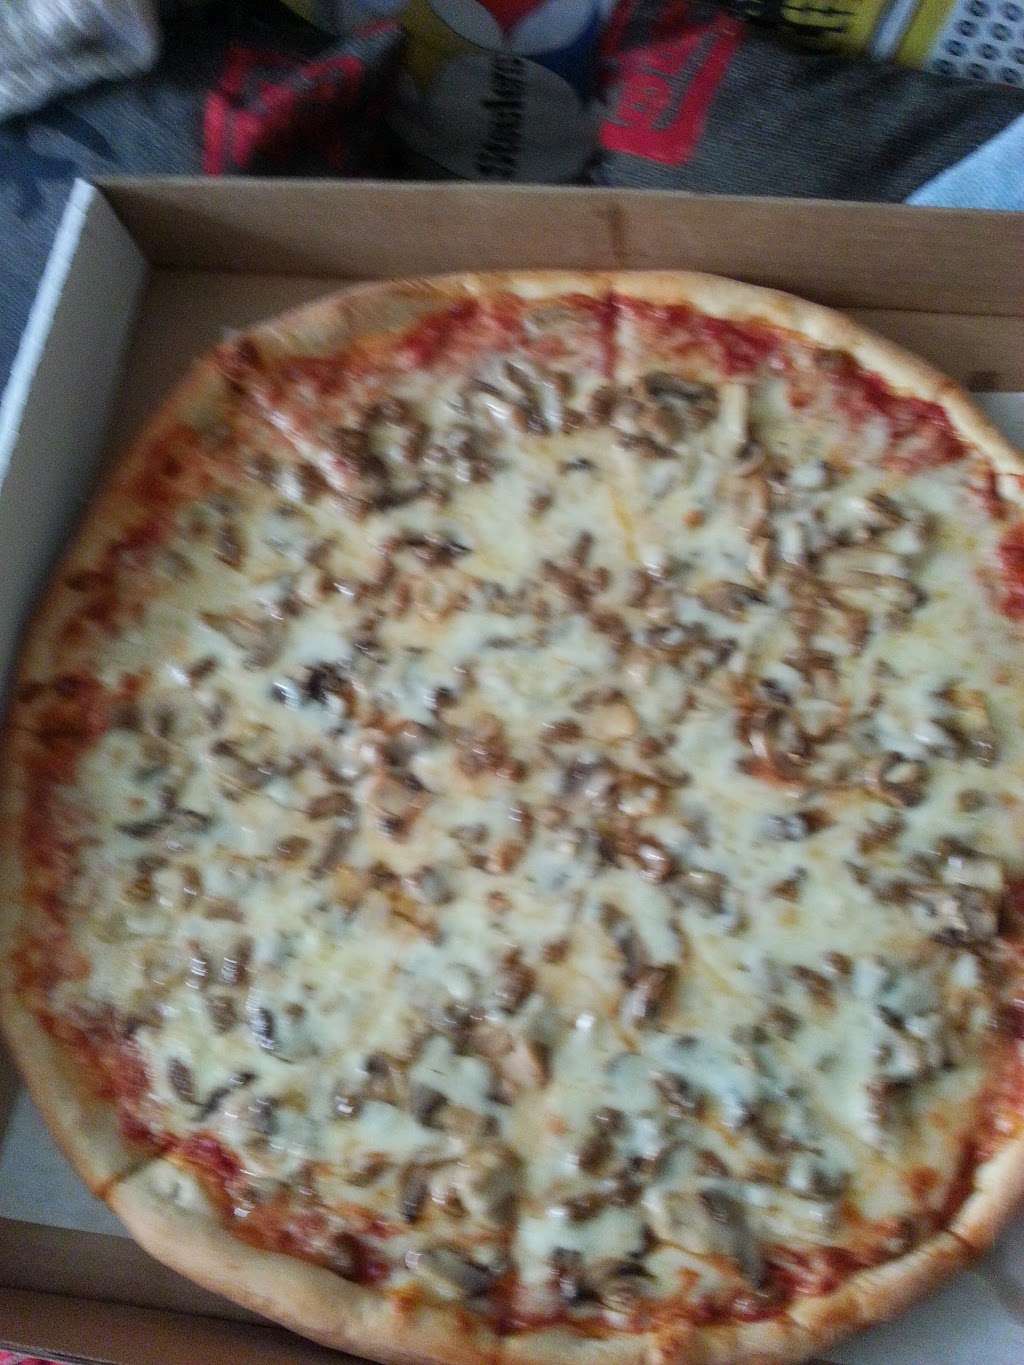 Pizza Di Roma | 954 N Main St, Pleasantville, NJ 08232 | Phone: (609) 646-0909